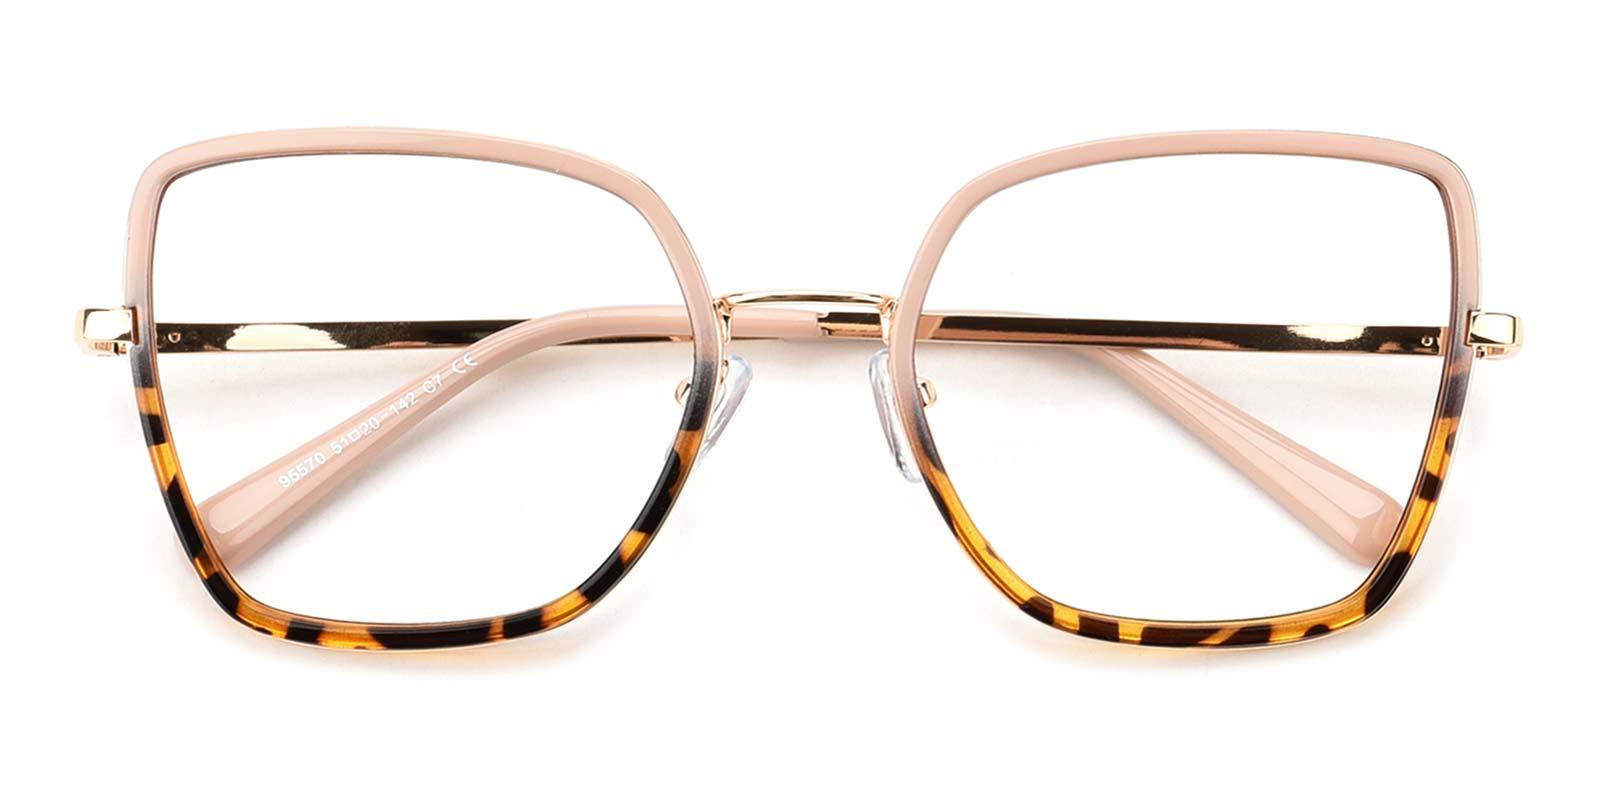 Fedora-Tortoise-Cat-Combination-Eyeglasses-detail